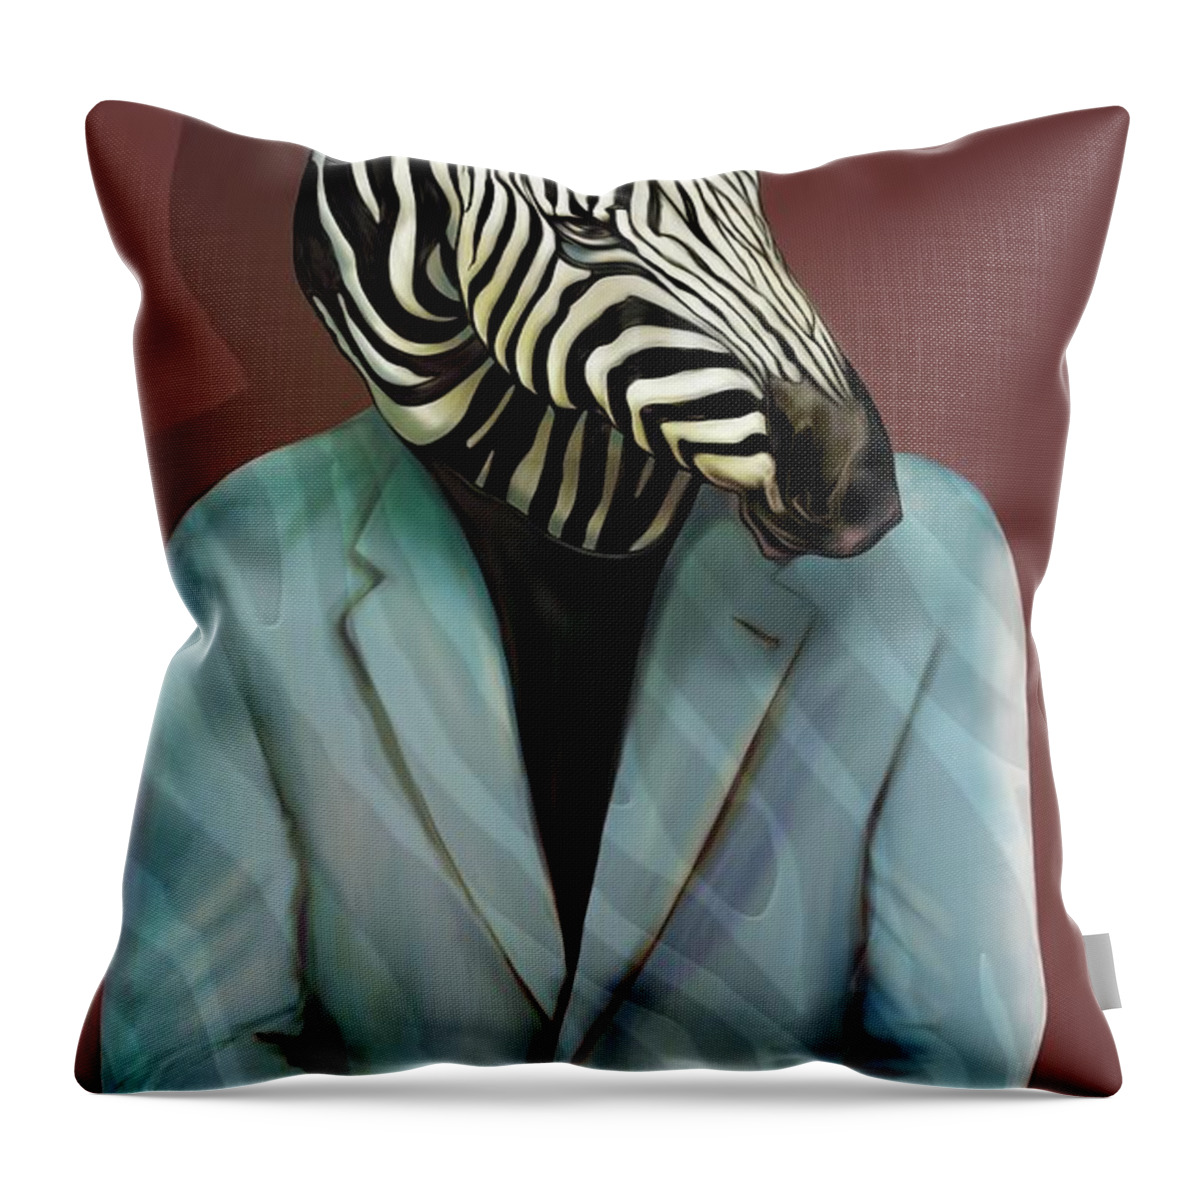 Zebra Throw Pillow featuring the mixed media White Stripped Zebra by Mark Tonelli